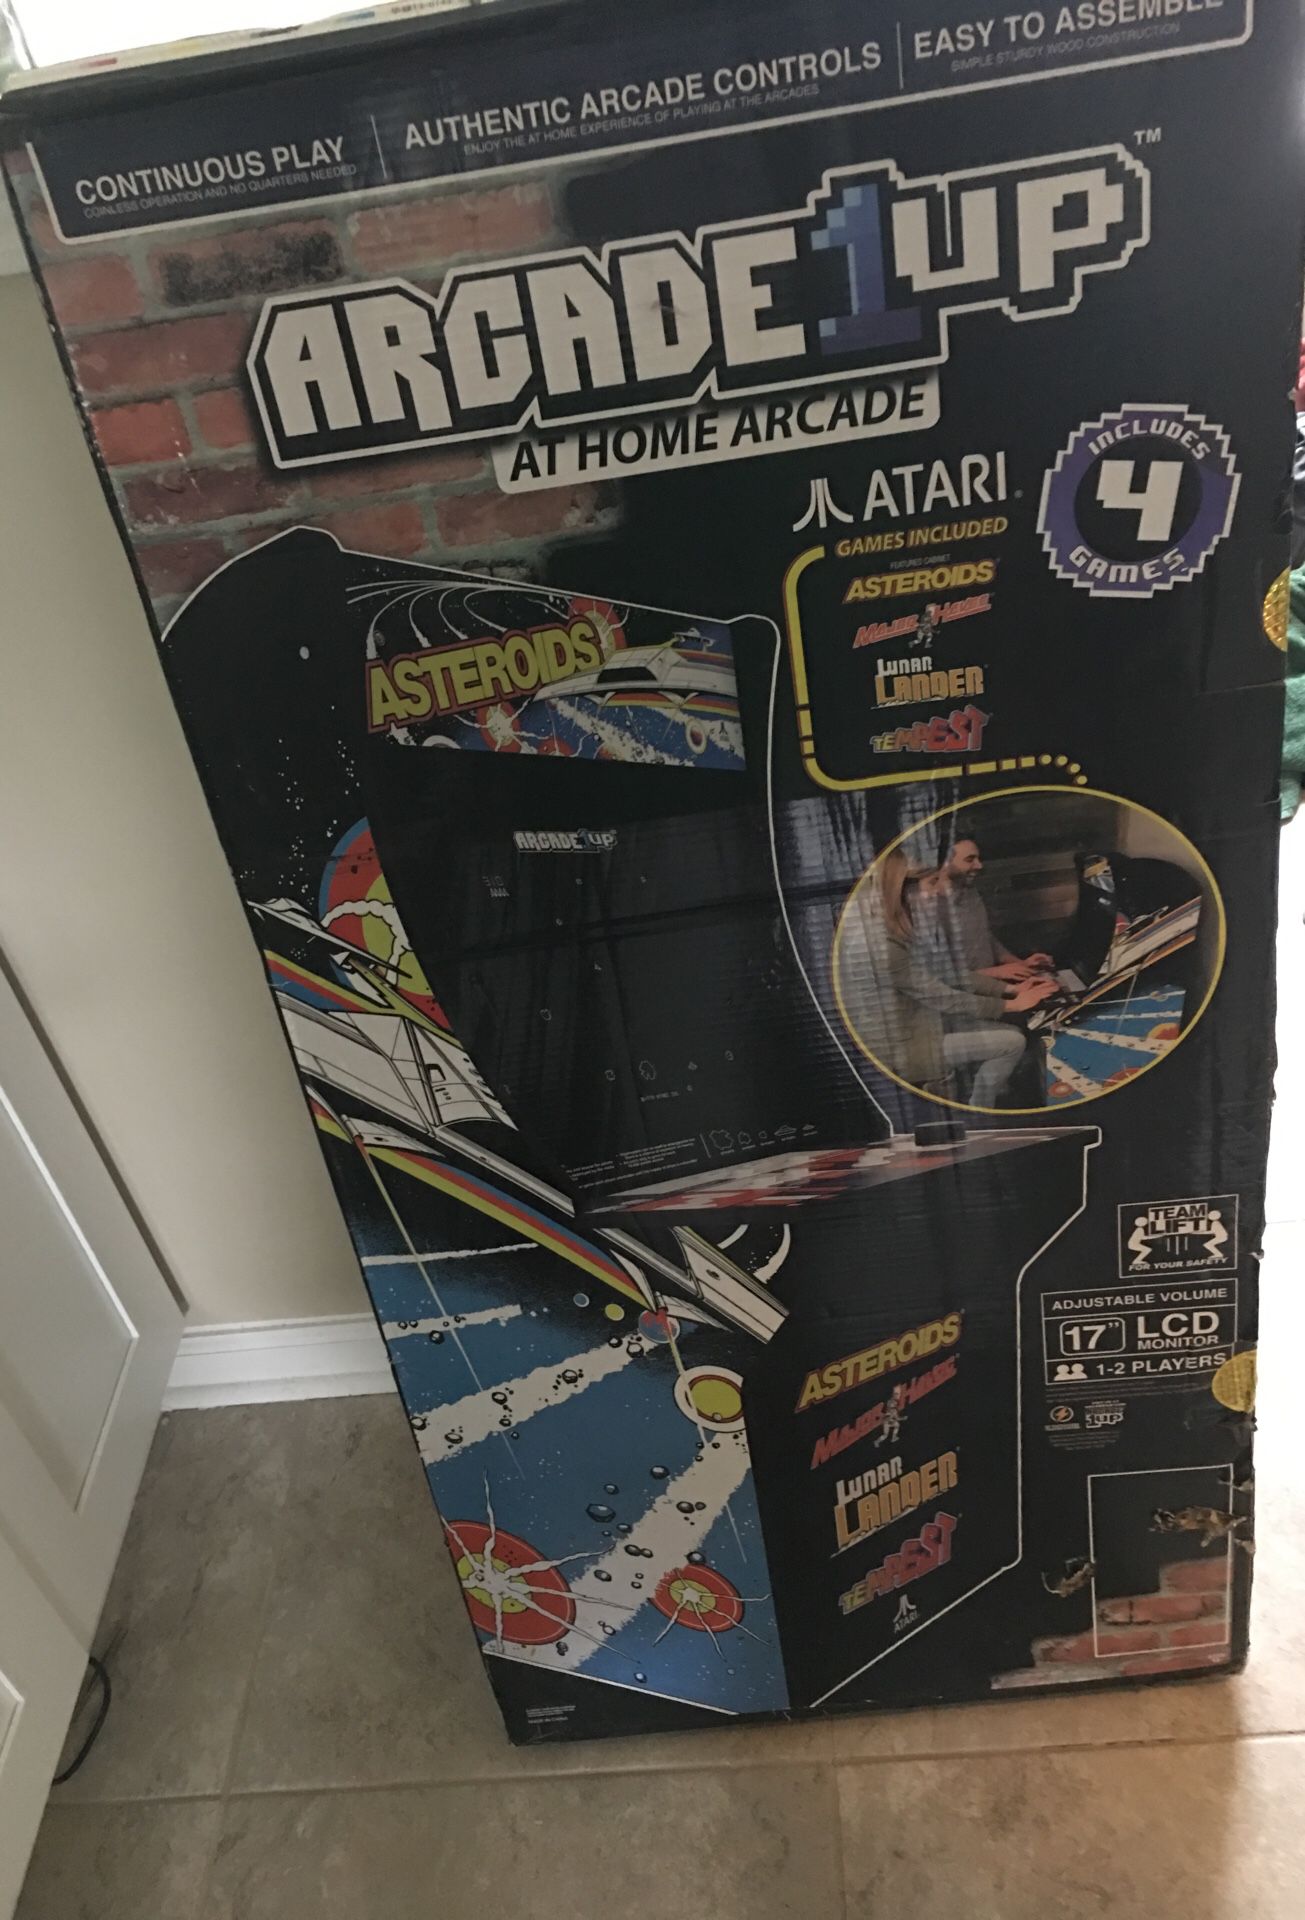 Asteroids home arcade game